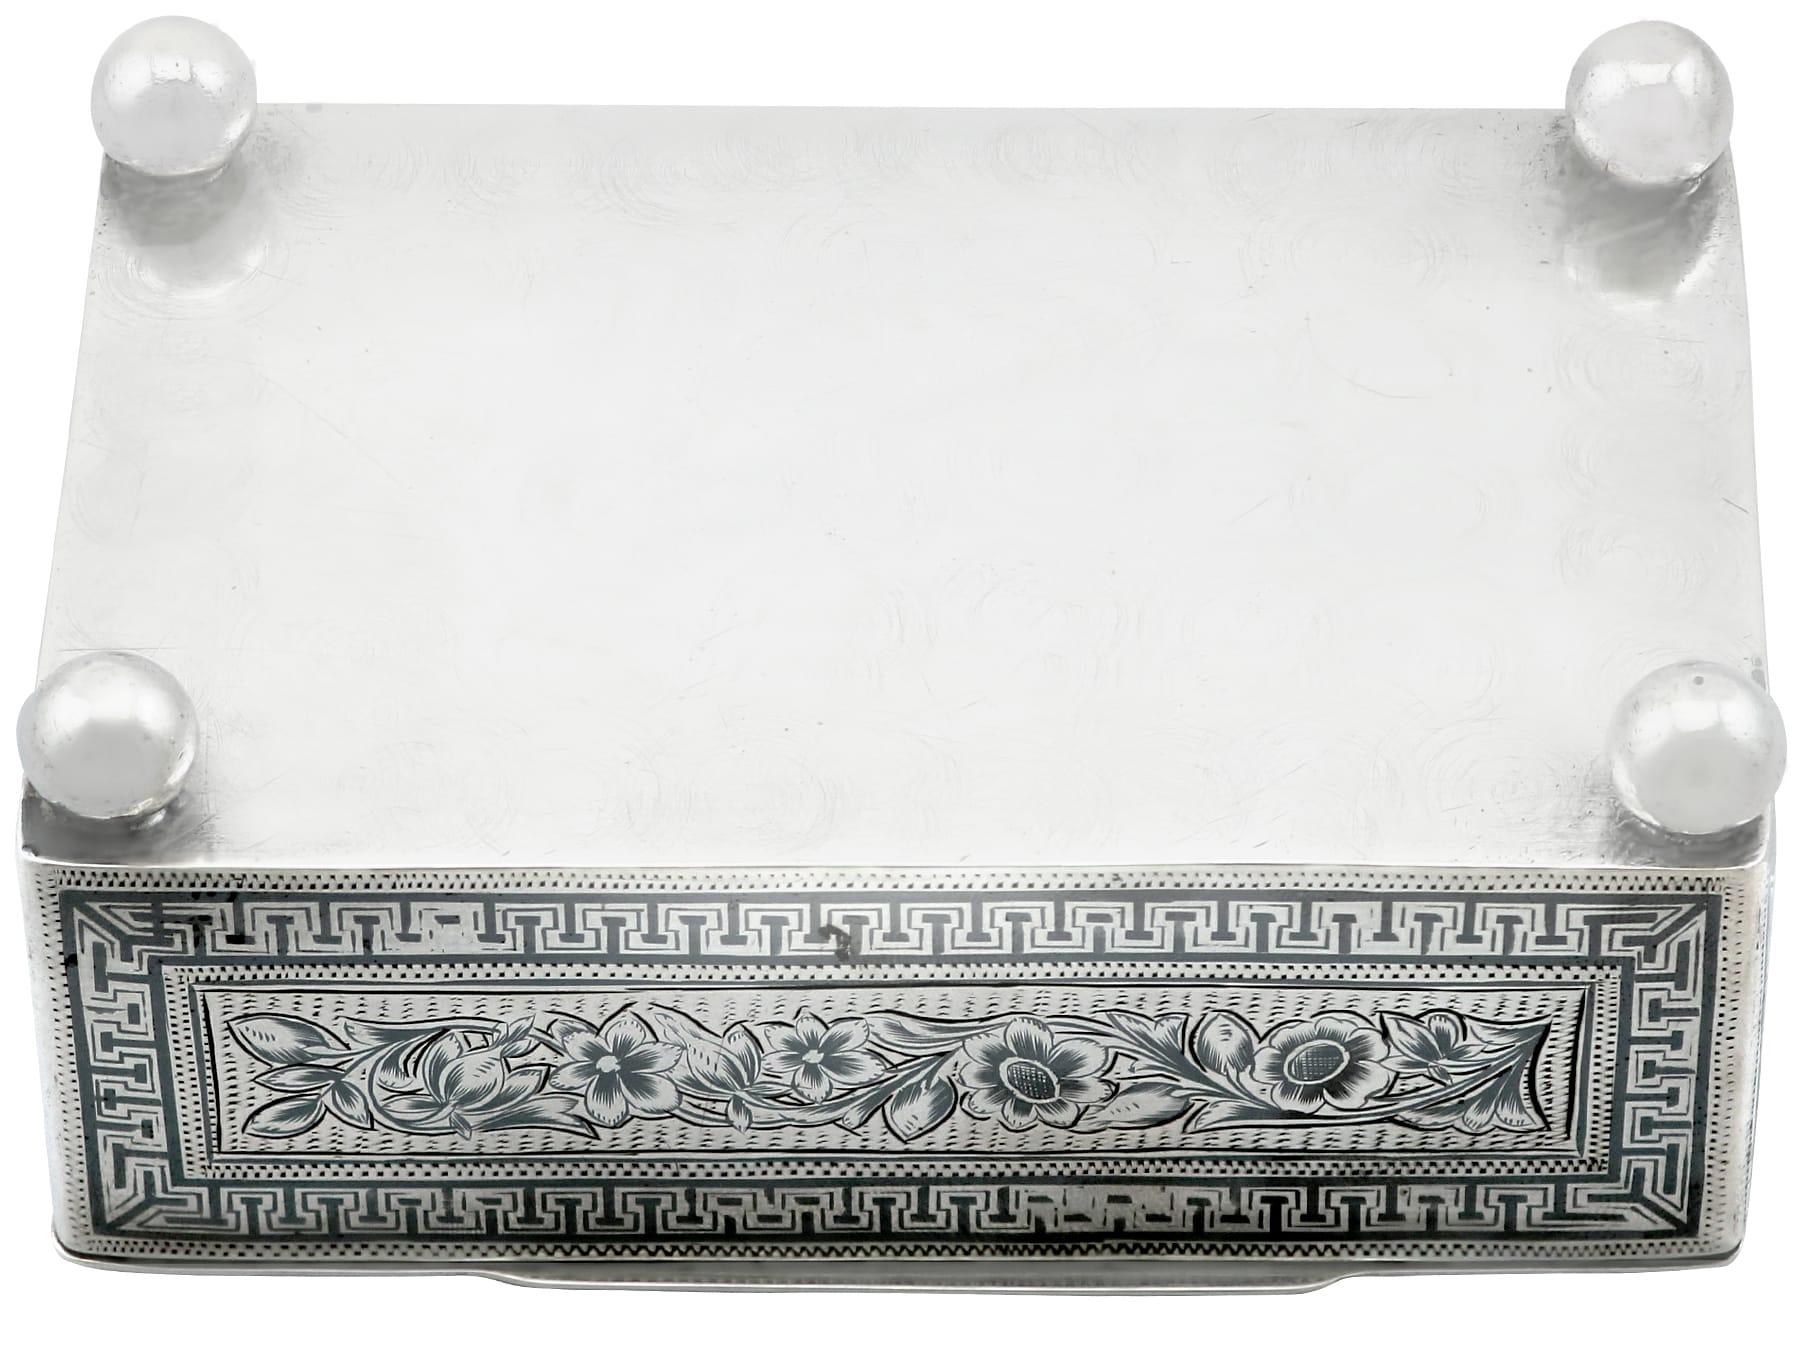 1800s Antique Persian Silver and Niello Enamel Box For Sale 8